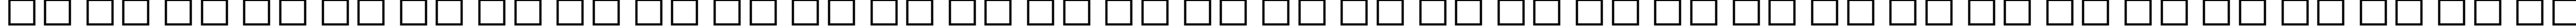 Пример написания русского алфавита шрифтом Tw Cen MT Condensed